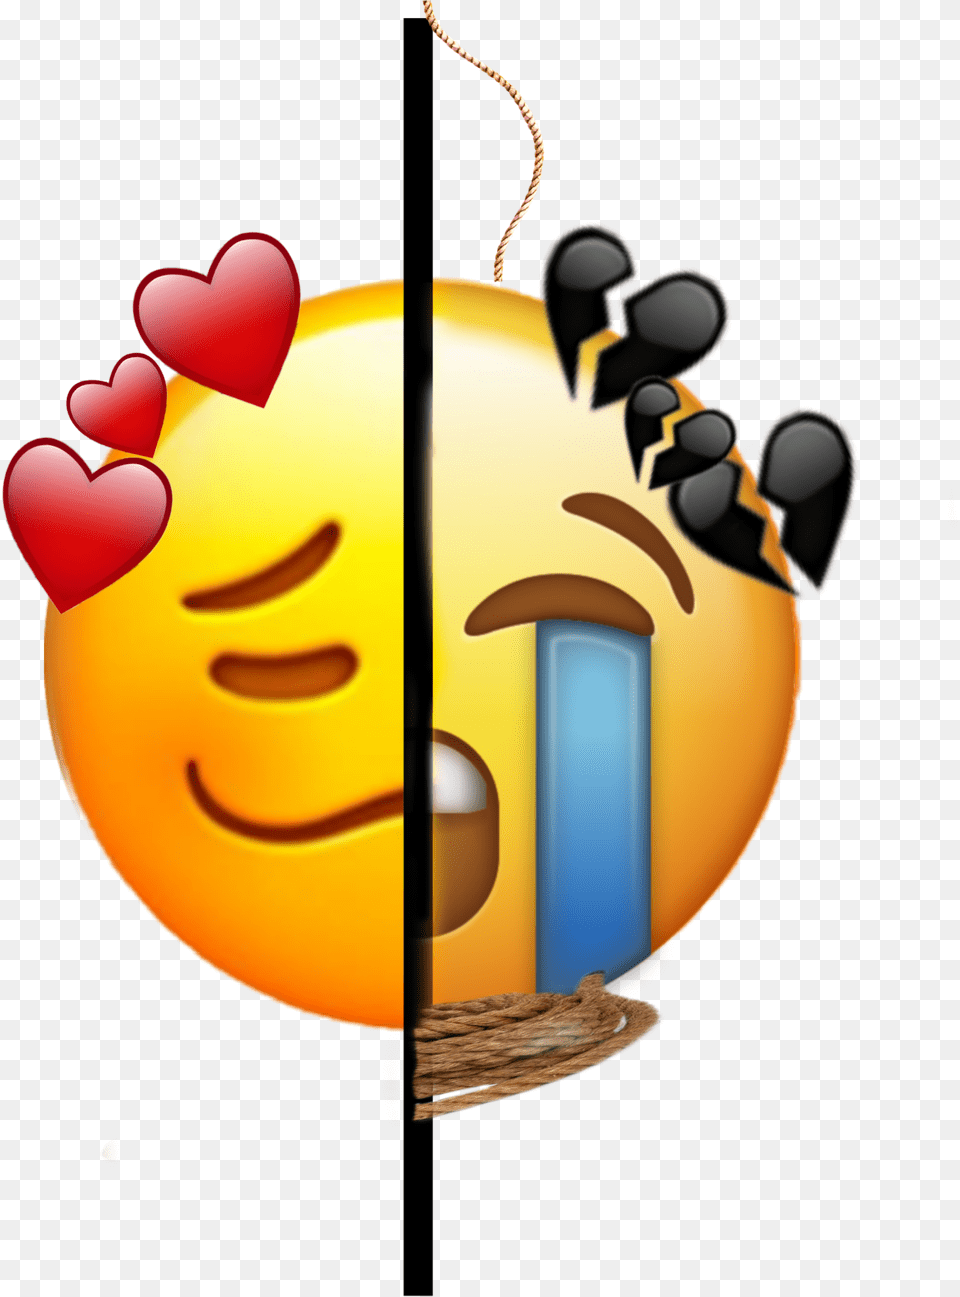 Inlove Heartbroken Hung Dead Emoji Heart Broken New Emojis, People, Person, Animal, Bee Free Transparent Png